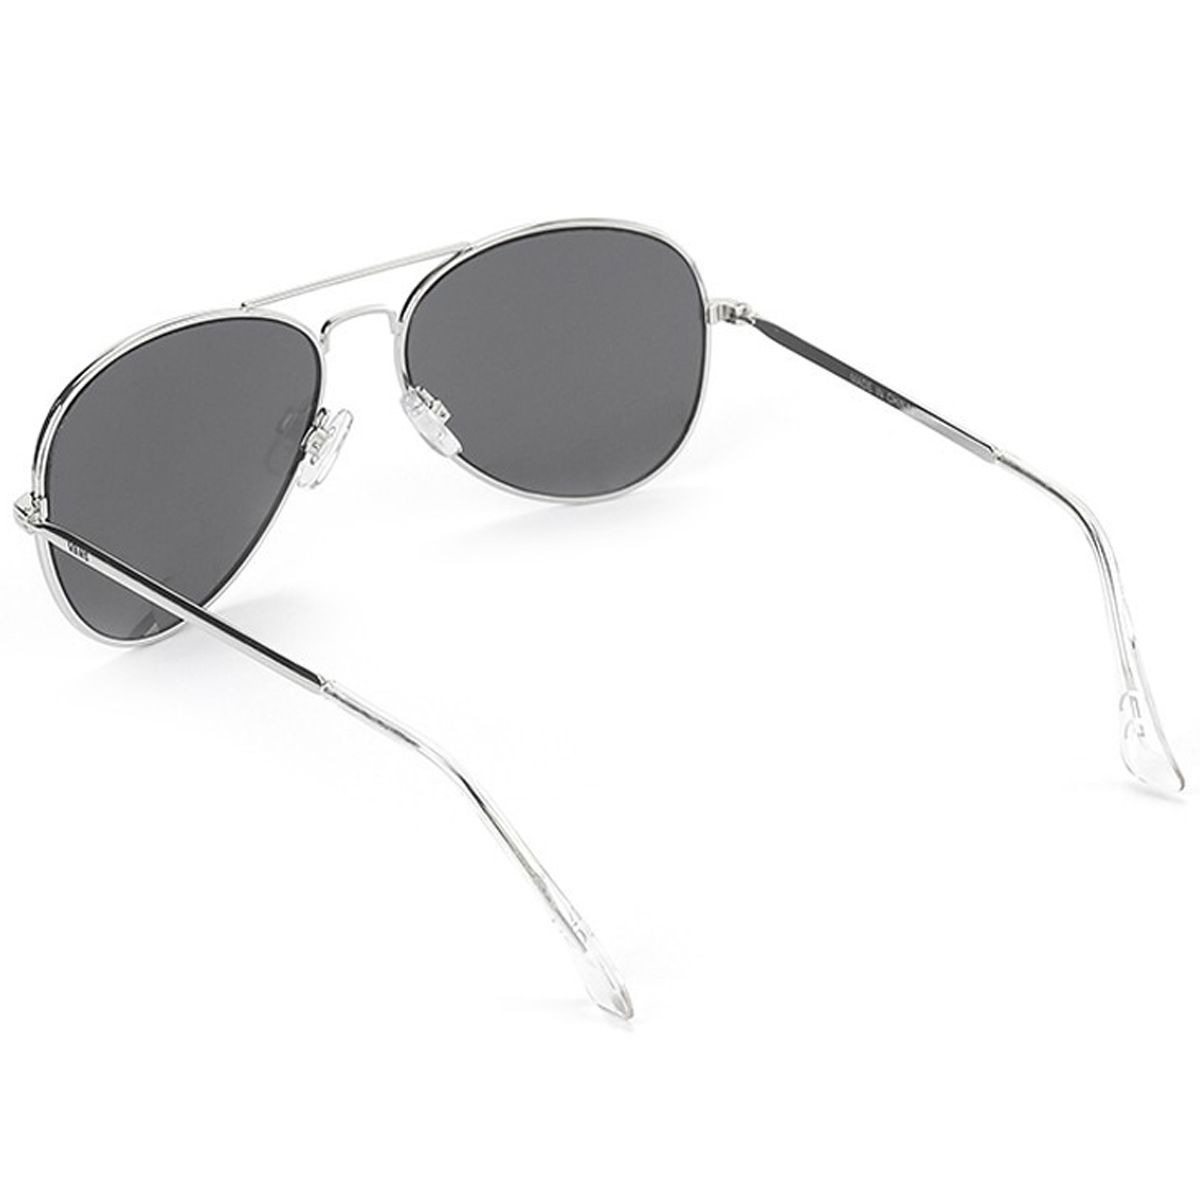 Vans Henderson Shades II Sunglasses - Silver